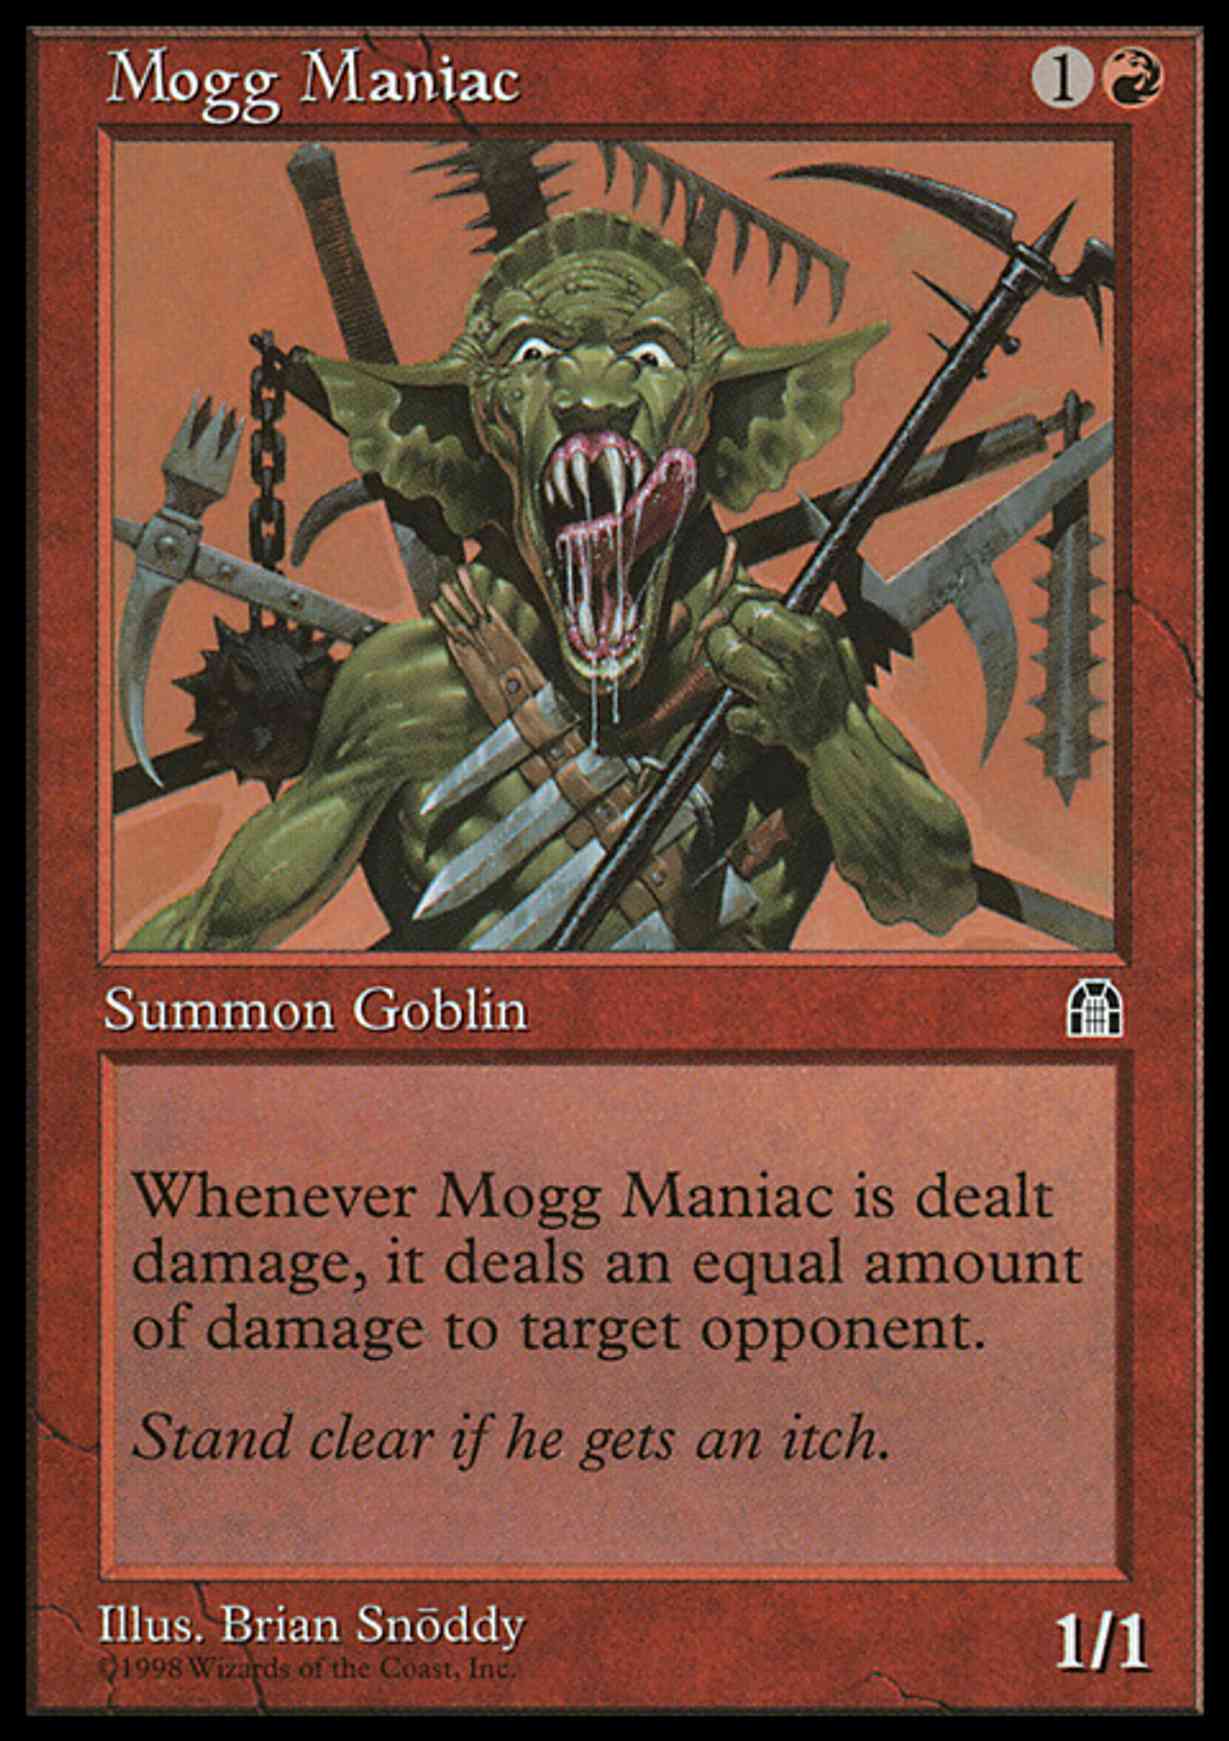 Mogg Maniac magic card front